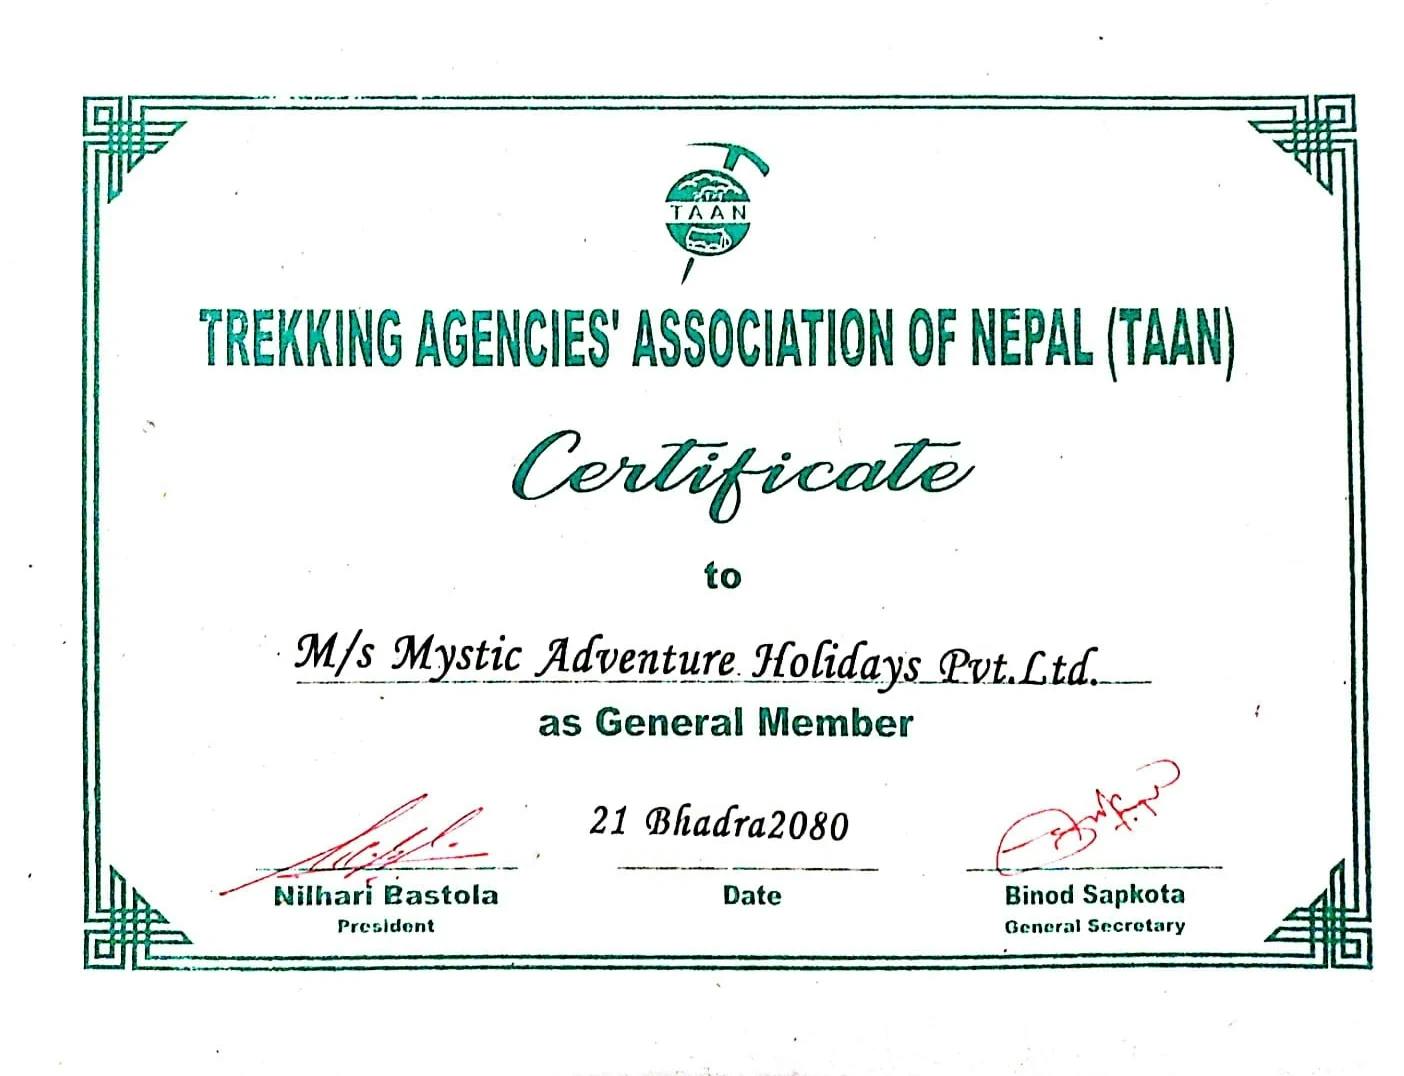 Trekking Agencies Association Of Nepal (TAAN) Membership Certificate